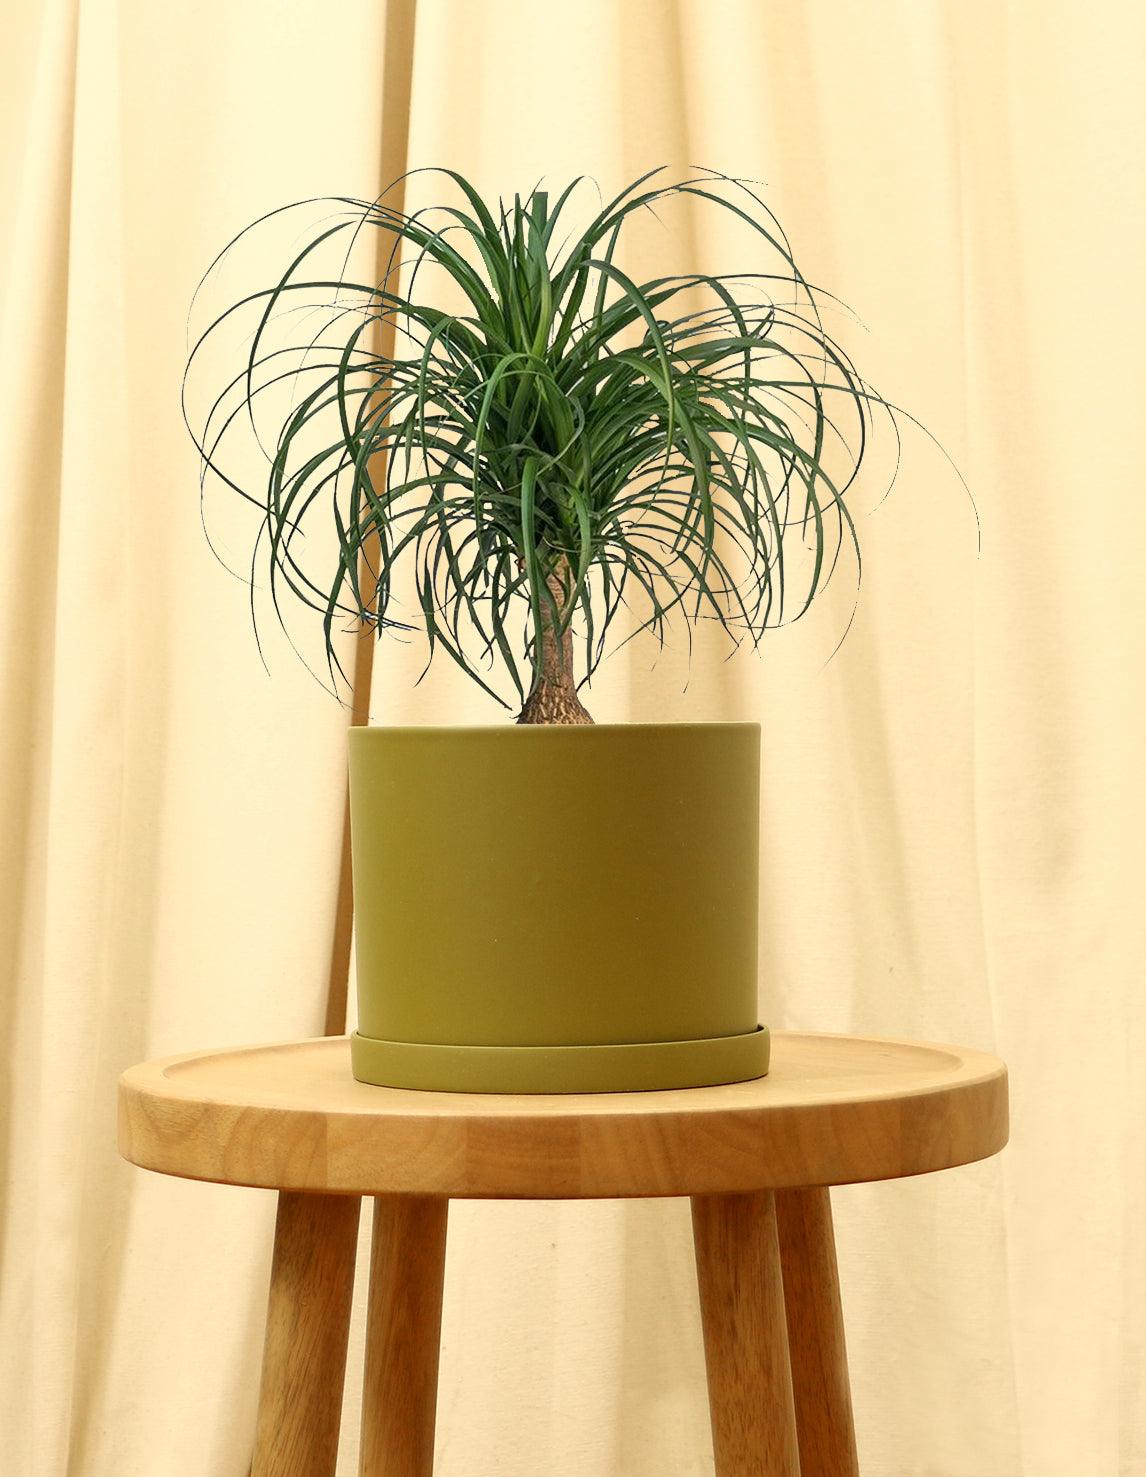 Medium Ponytail Palm Plant in green pot.